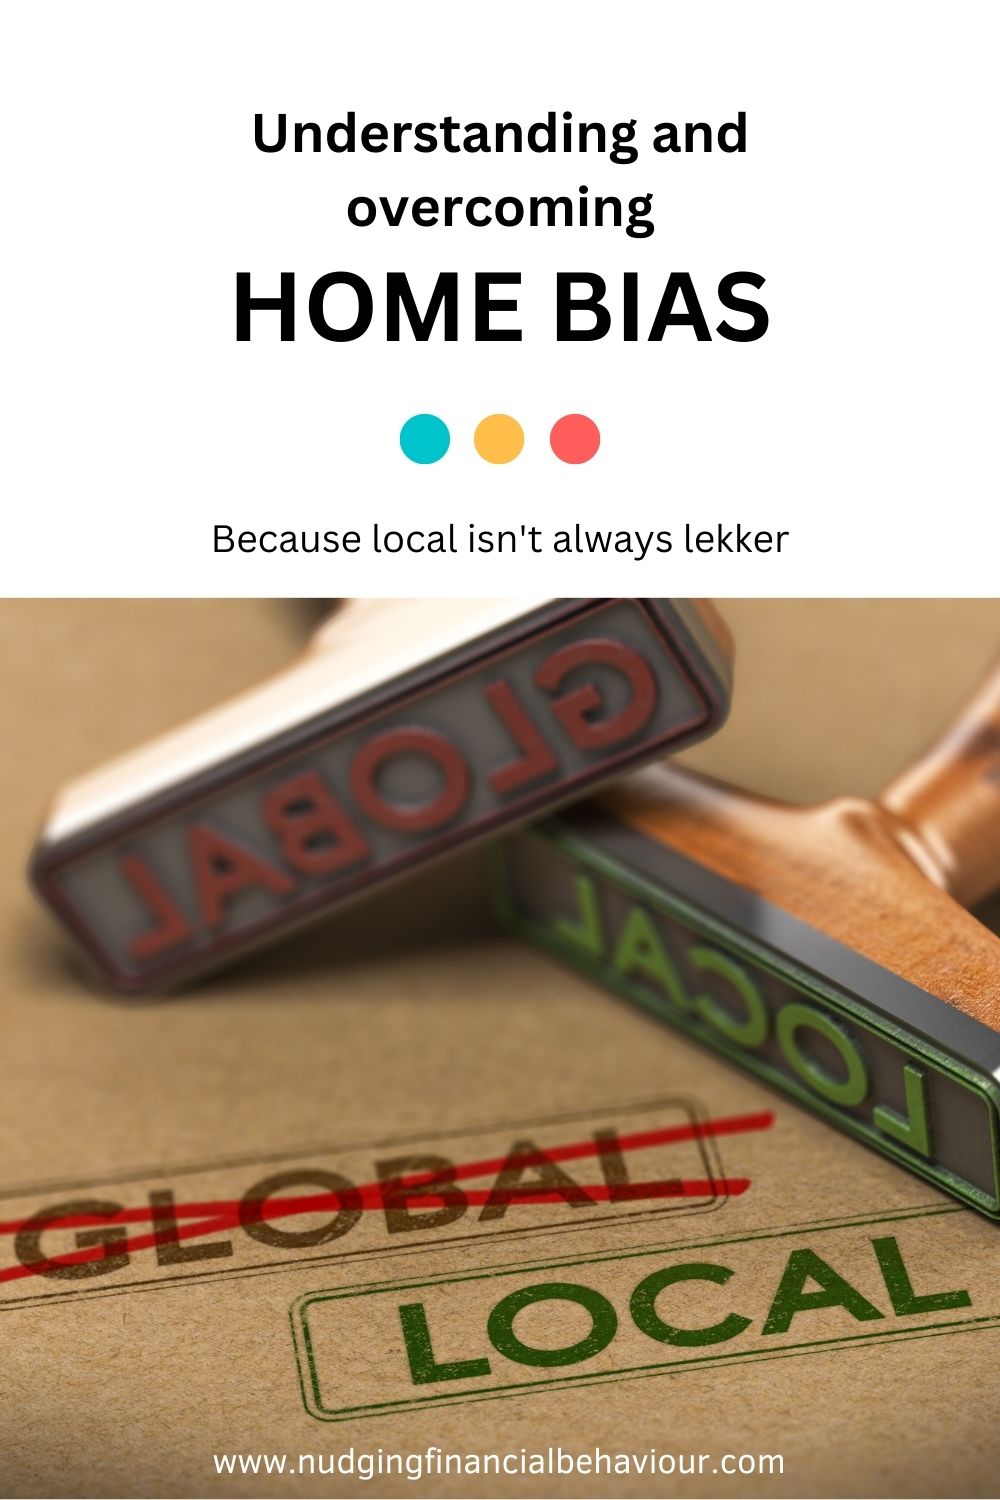 Understanding and overcoming home bias